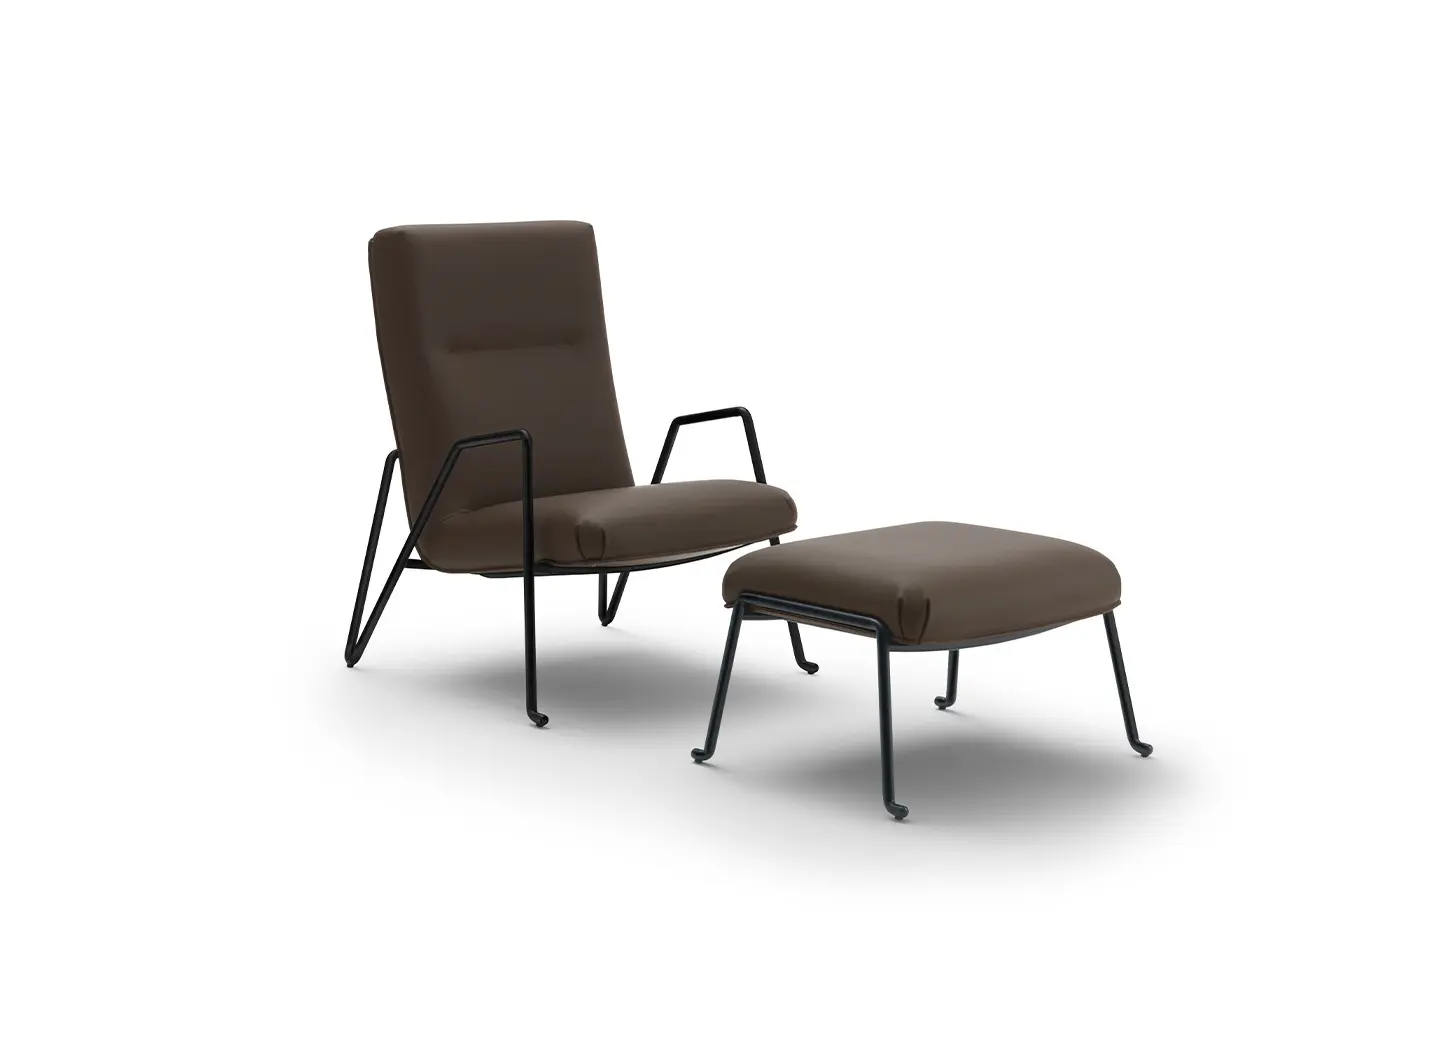 Solice armchair design Neri&Hu